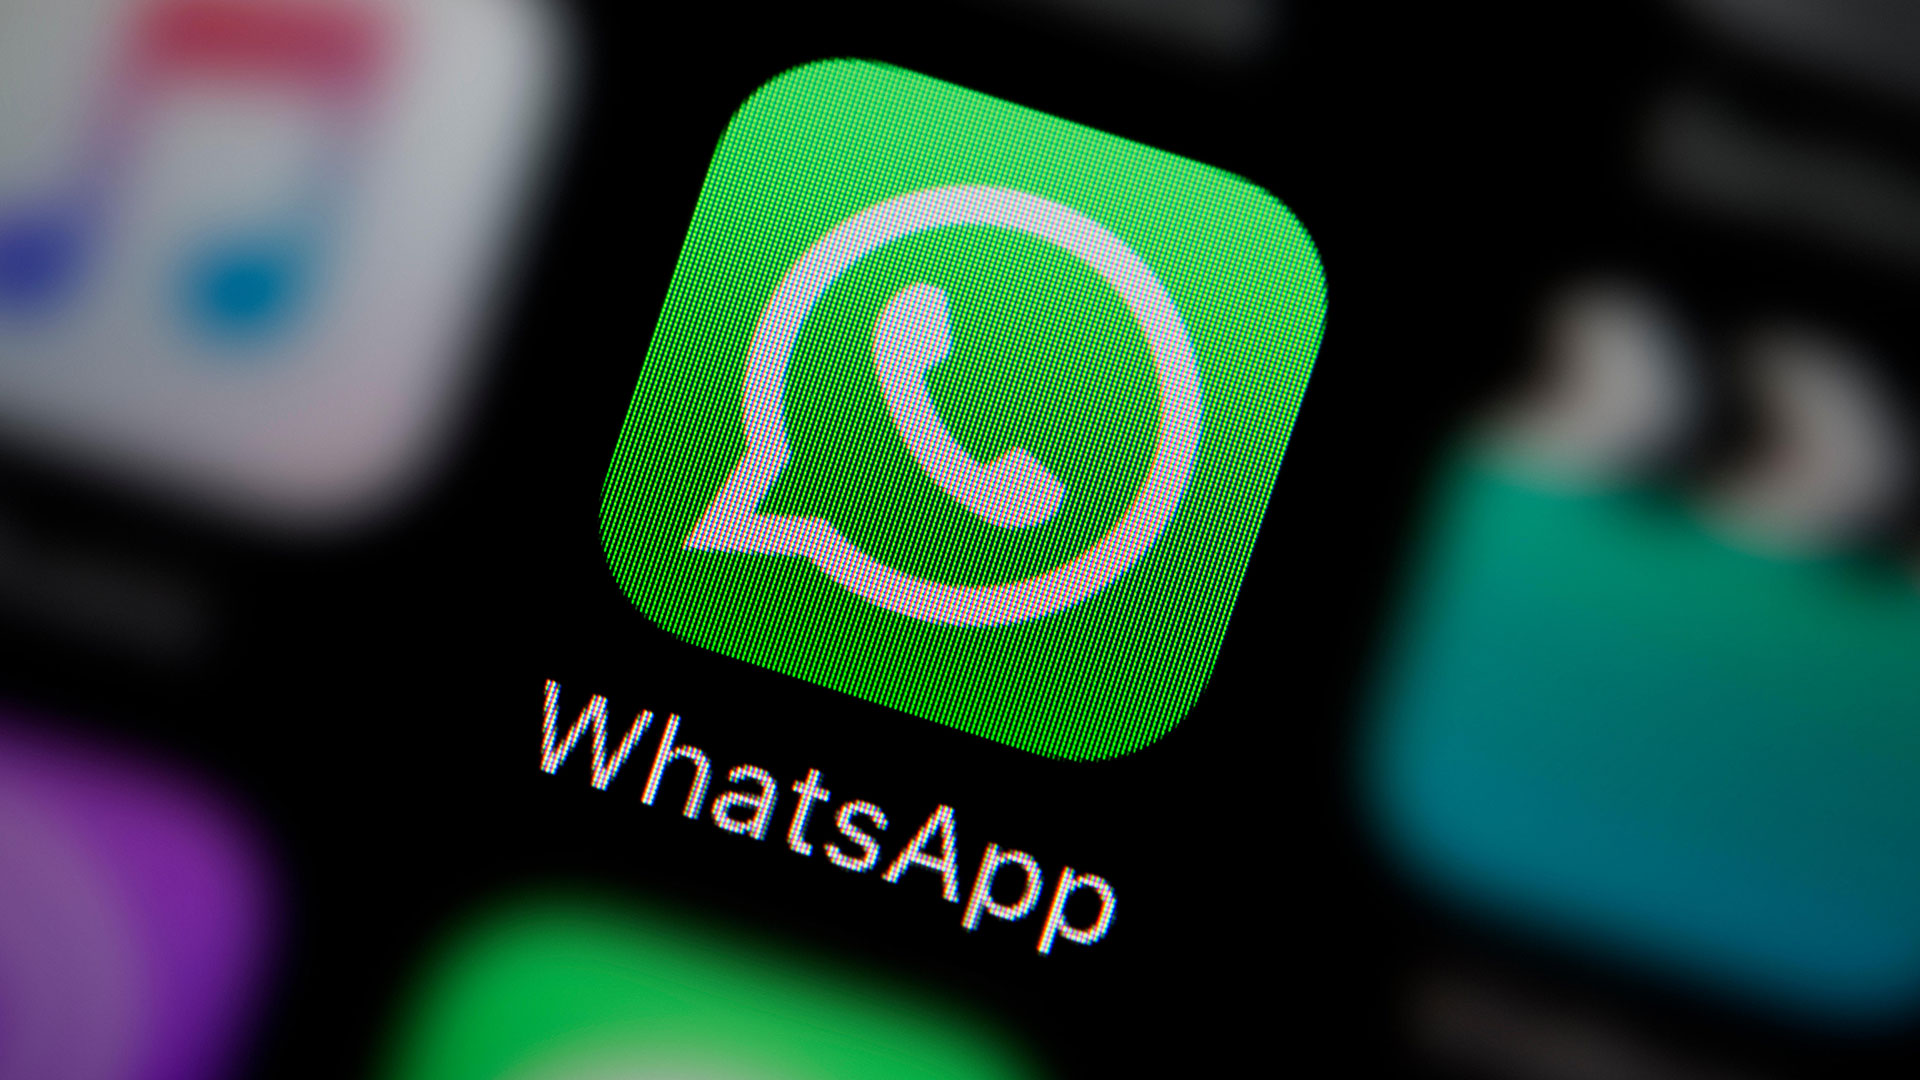 WhatsApp begynder at teste den AI-drevne chatbot Meta